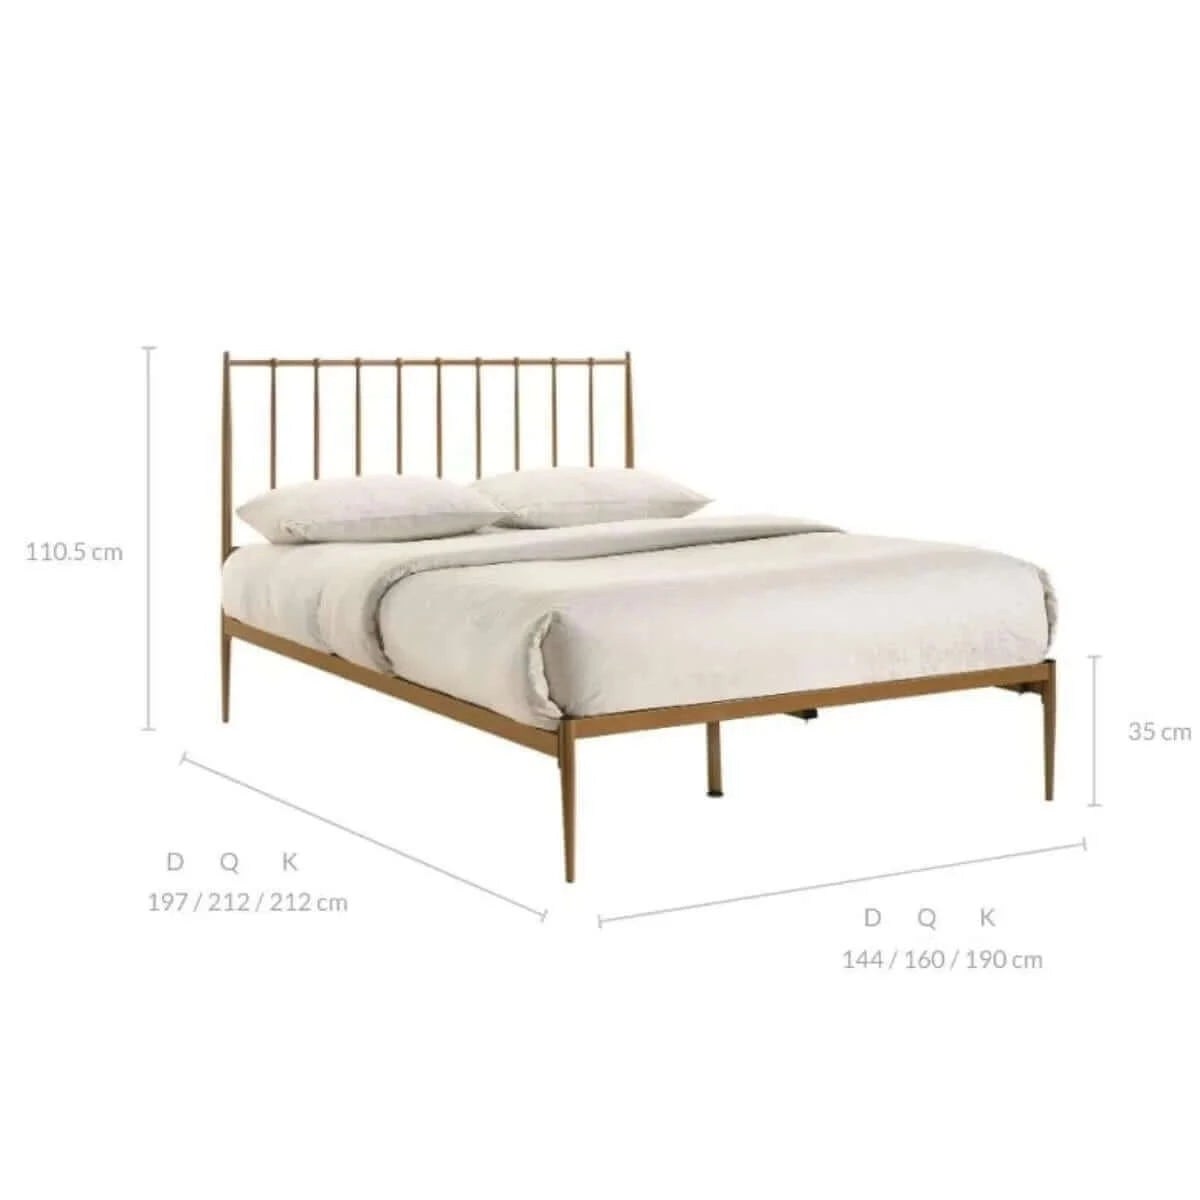 Buy metal bed frame base platform in gold double mid century timber slat - upinteriors-Upinteriors